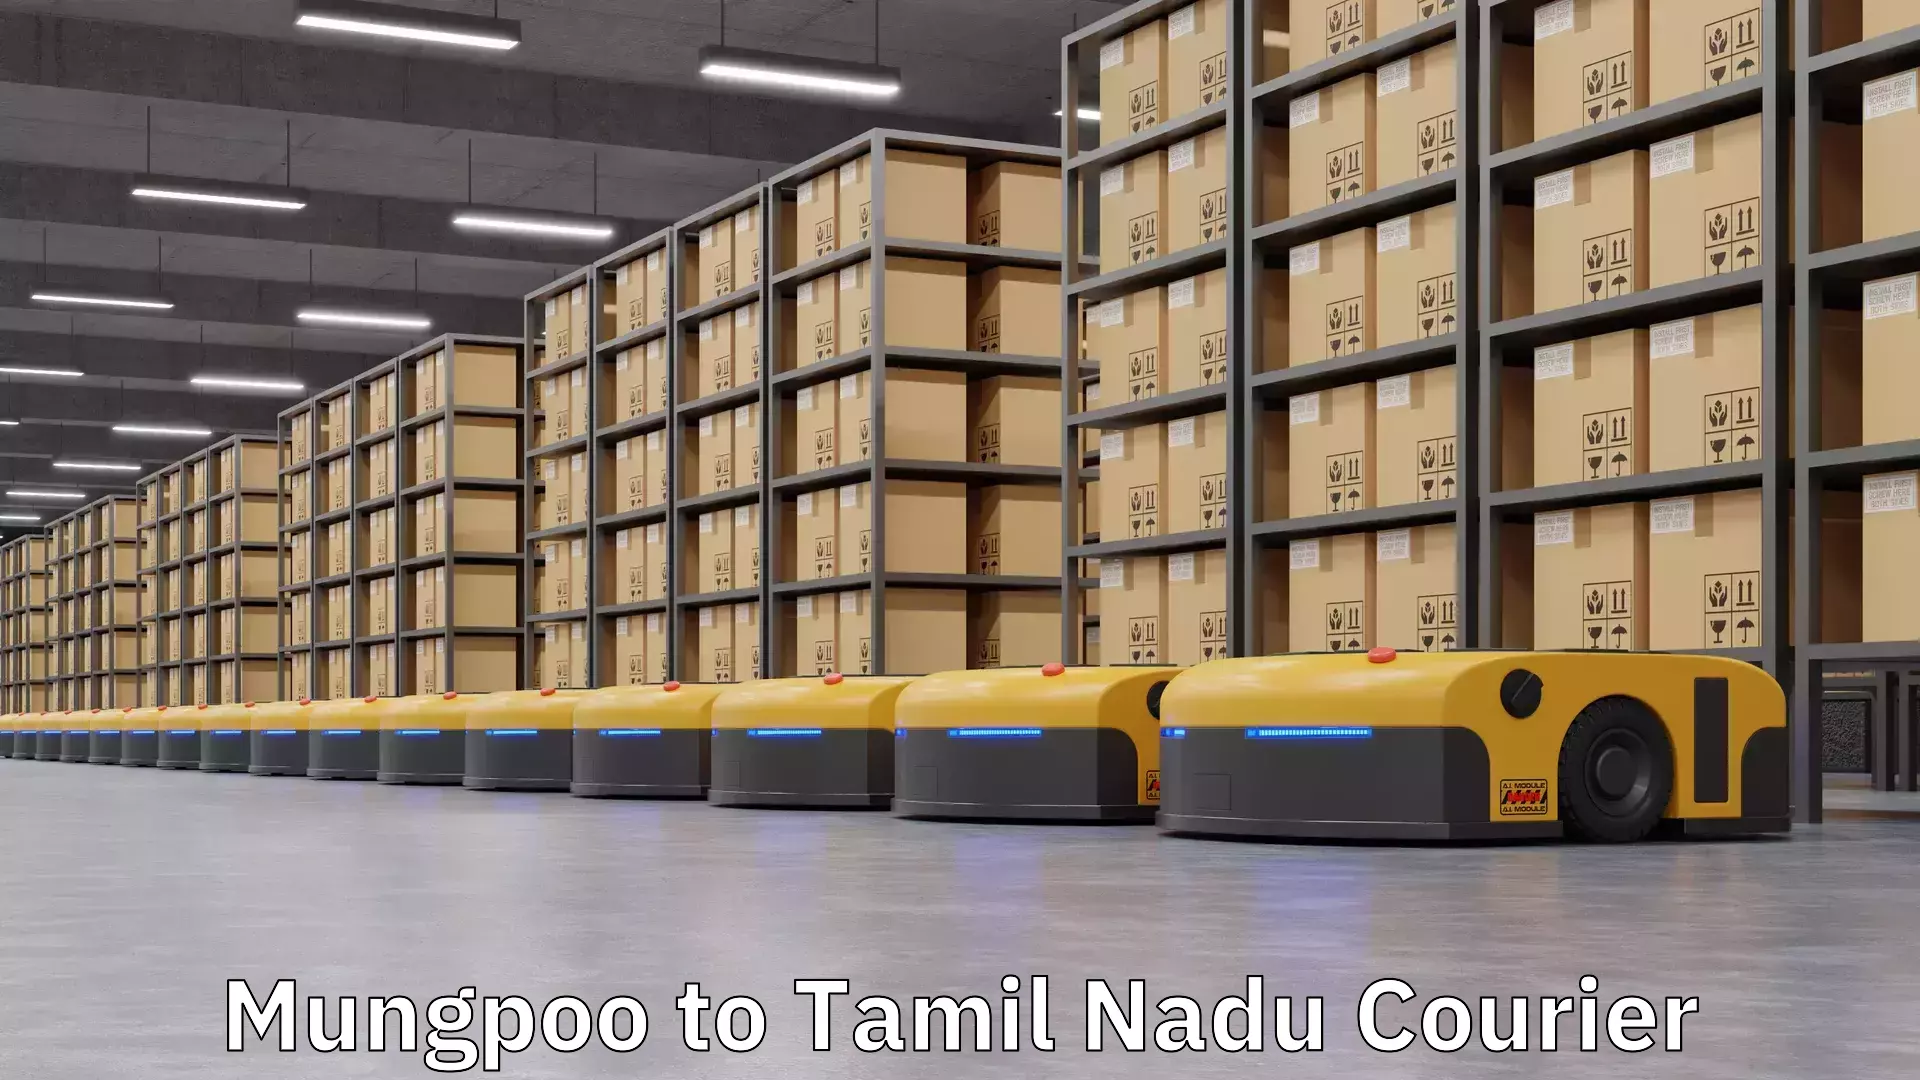 Supply chain efficiency in Mungpoo to Tamil Nadu